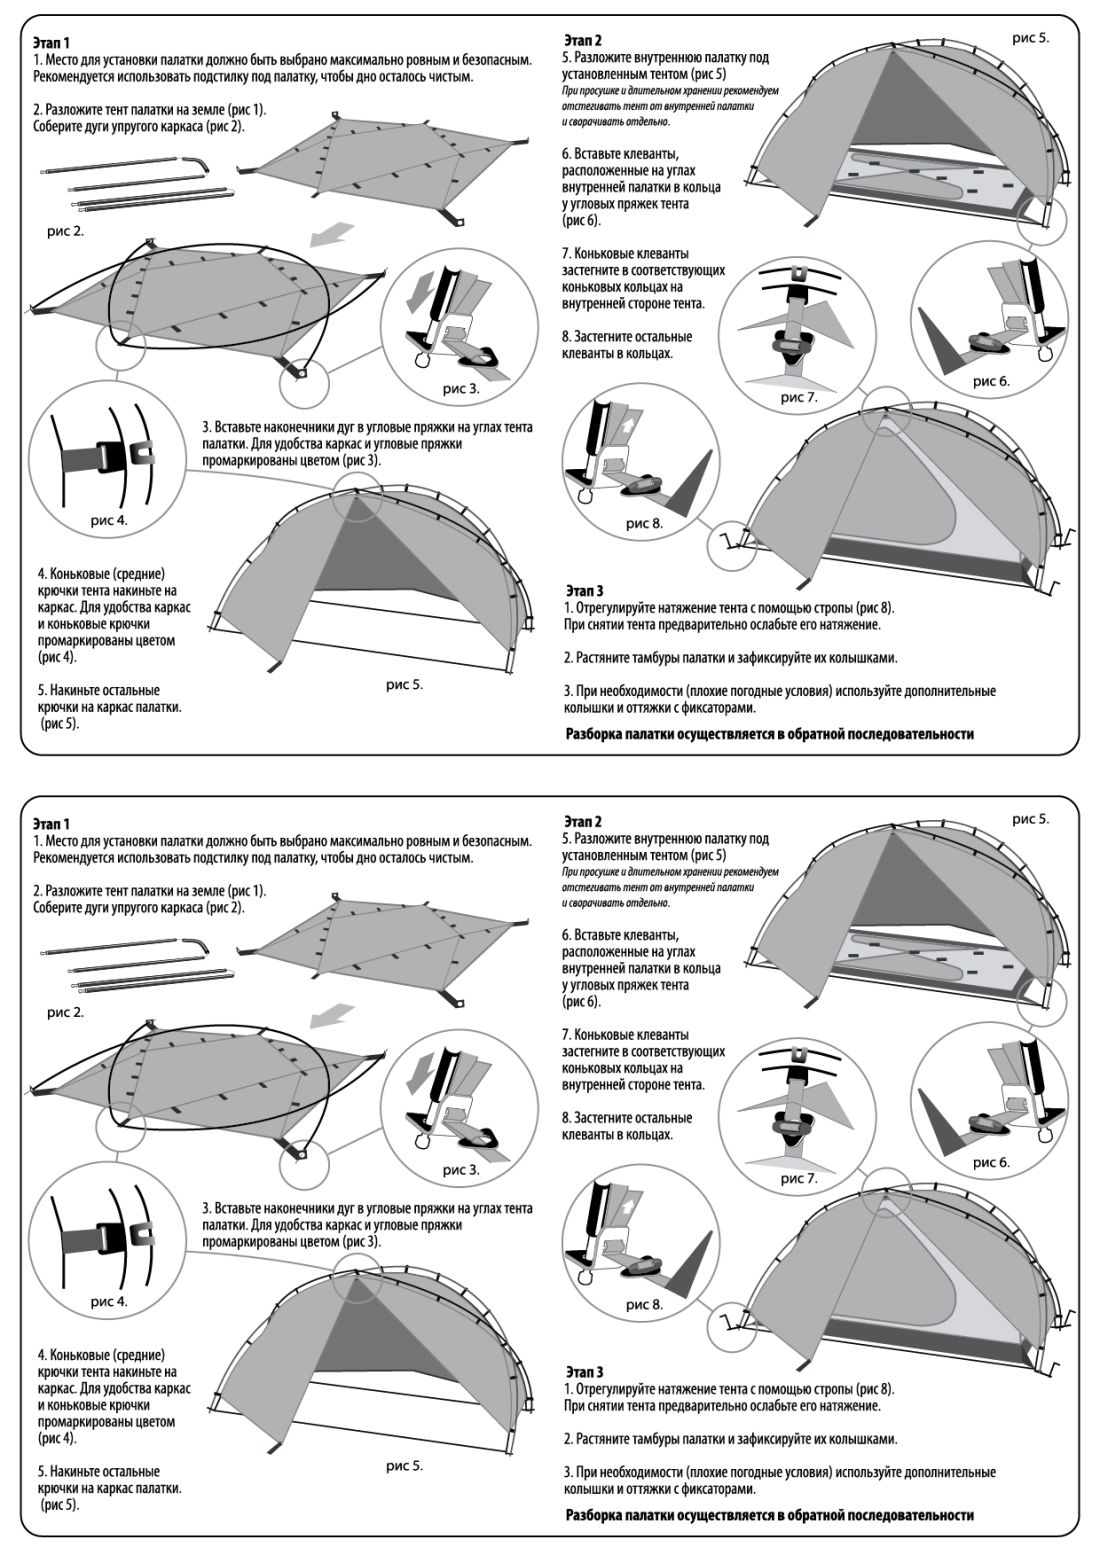 Normal - Легкая двухместна палатка Траппер 2 Si/PU